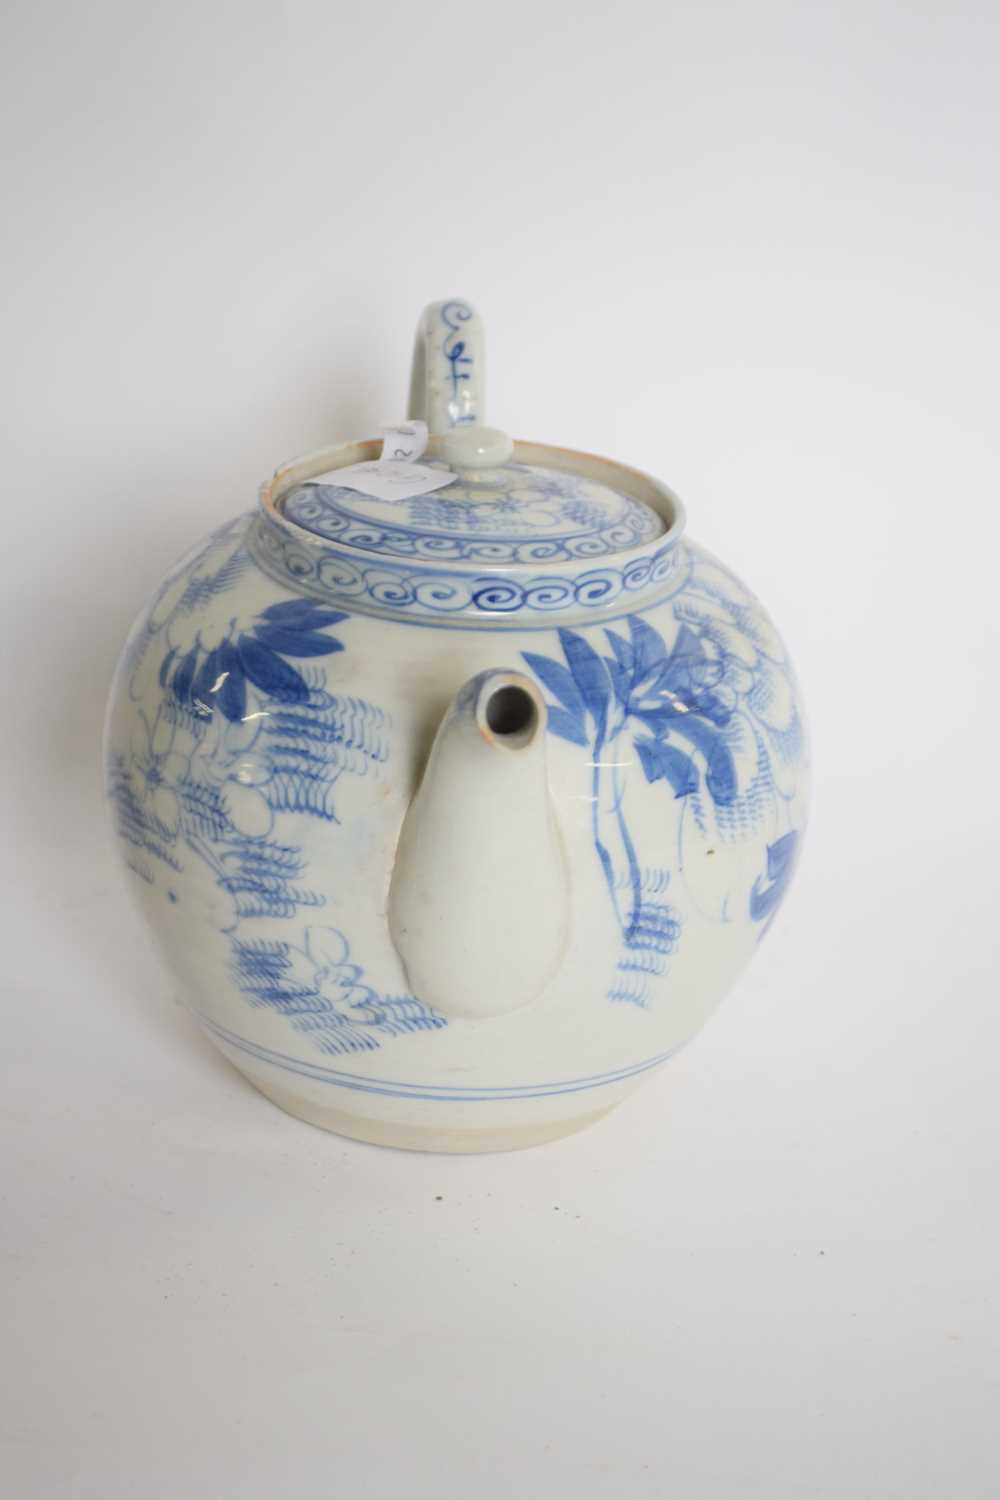 20th century Japanese porcelain tea pot - Image 2 of 3